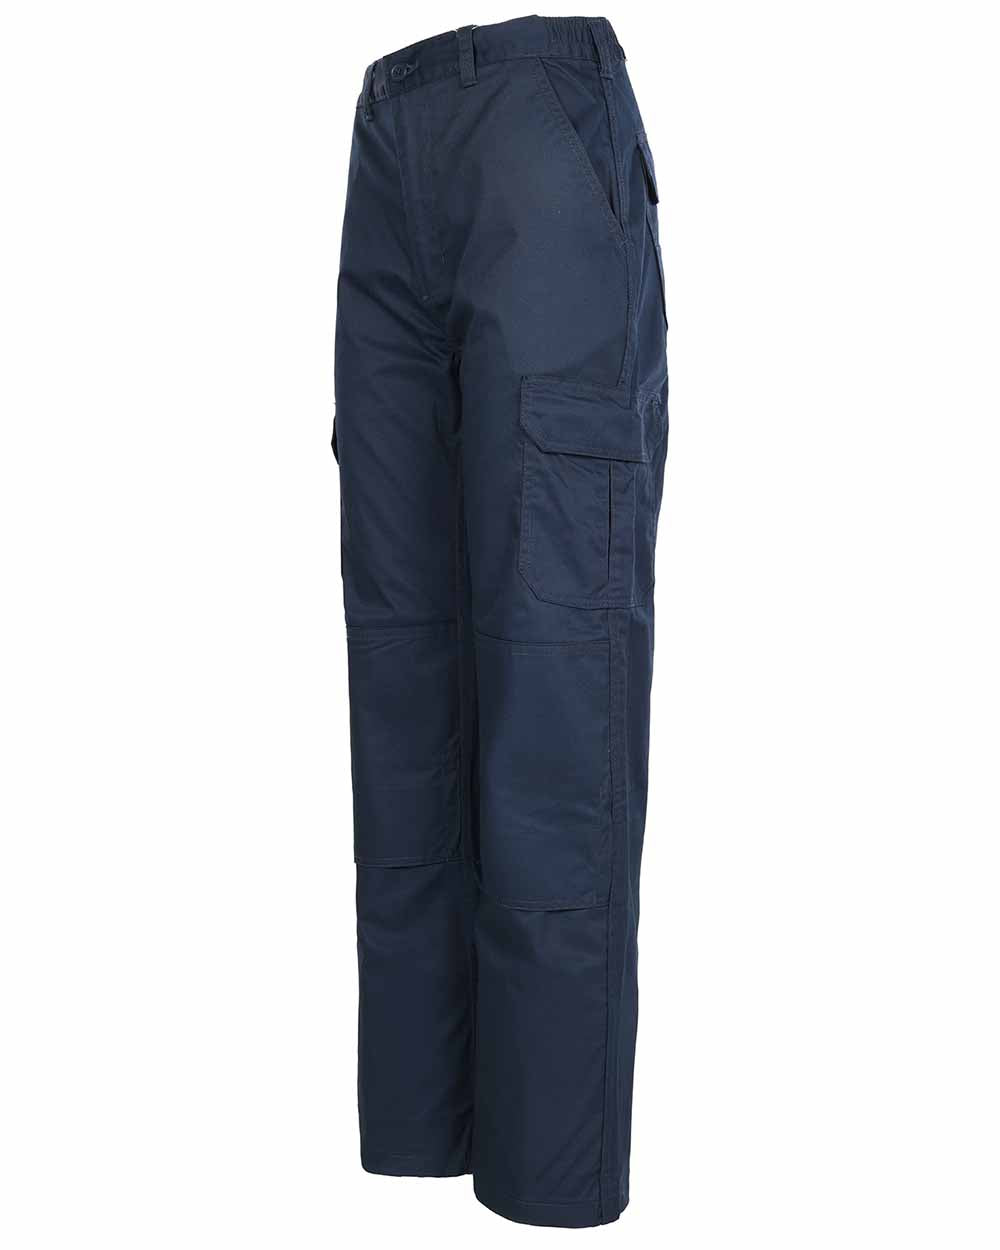 Work cargo pants Fort Workforce Trousers in Navy 